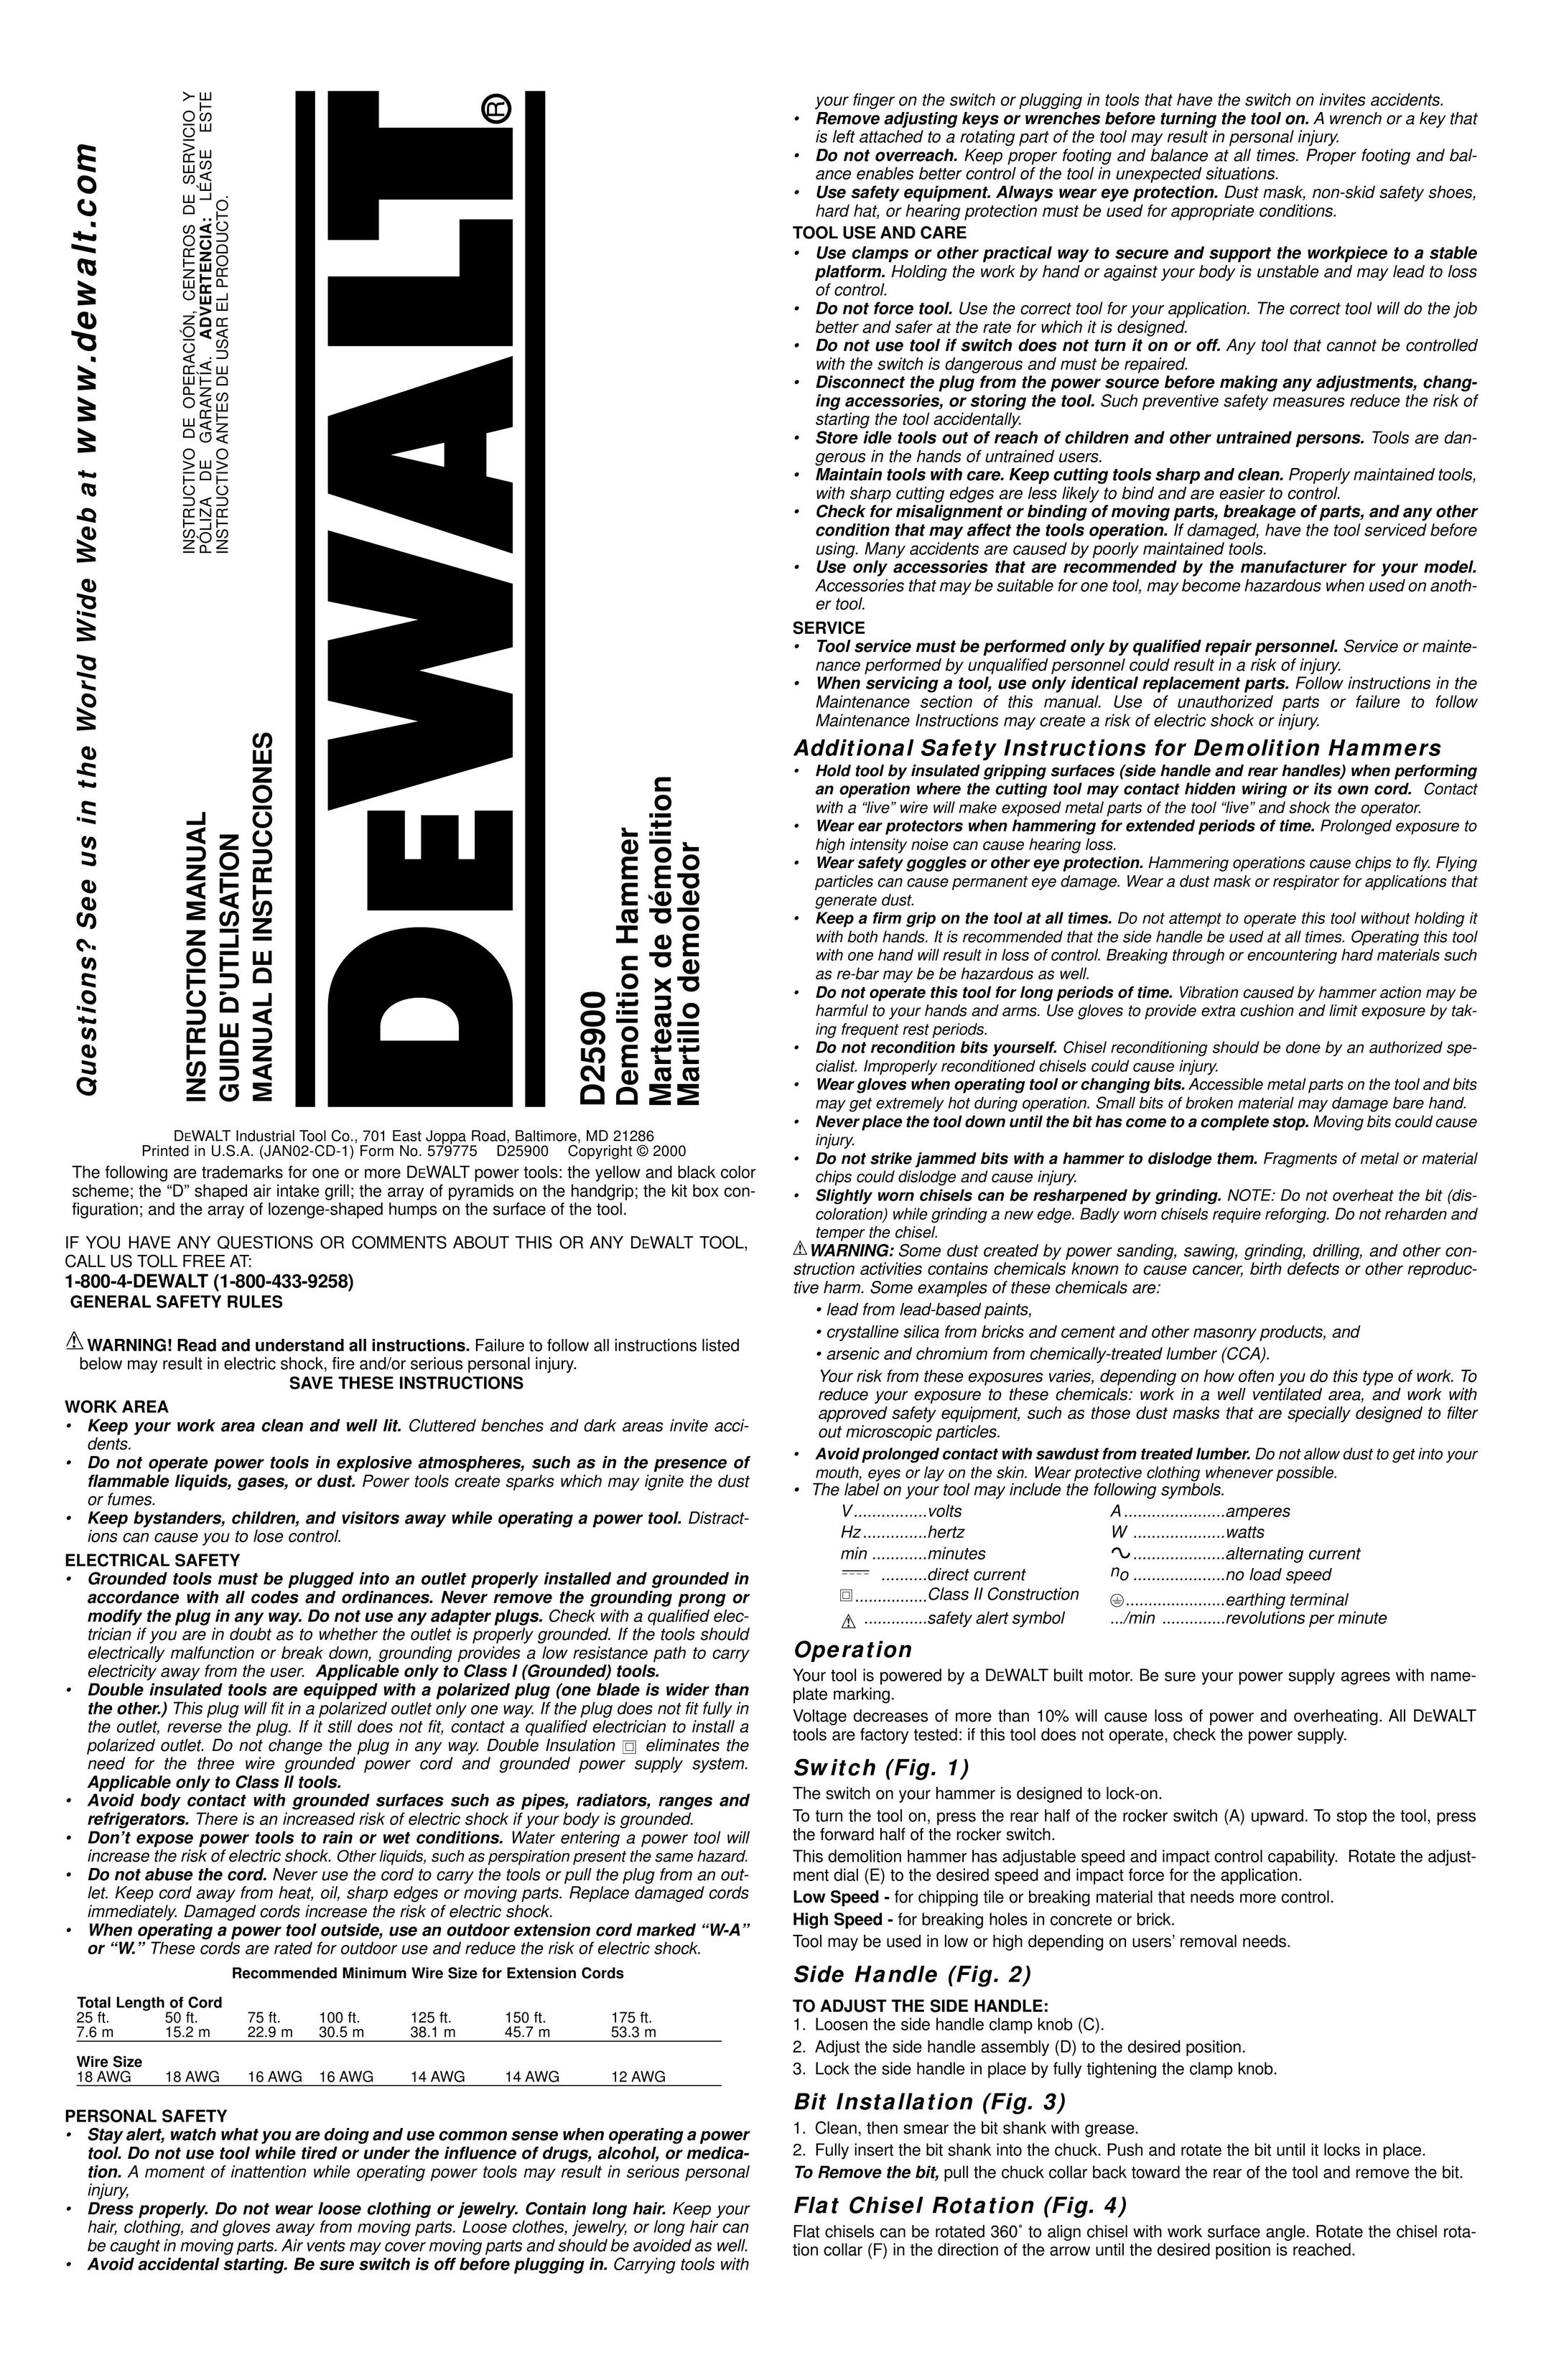 DeWalt 579775 Power Hammer User Manual